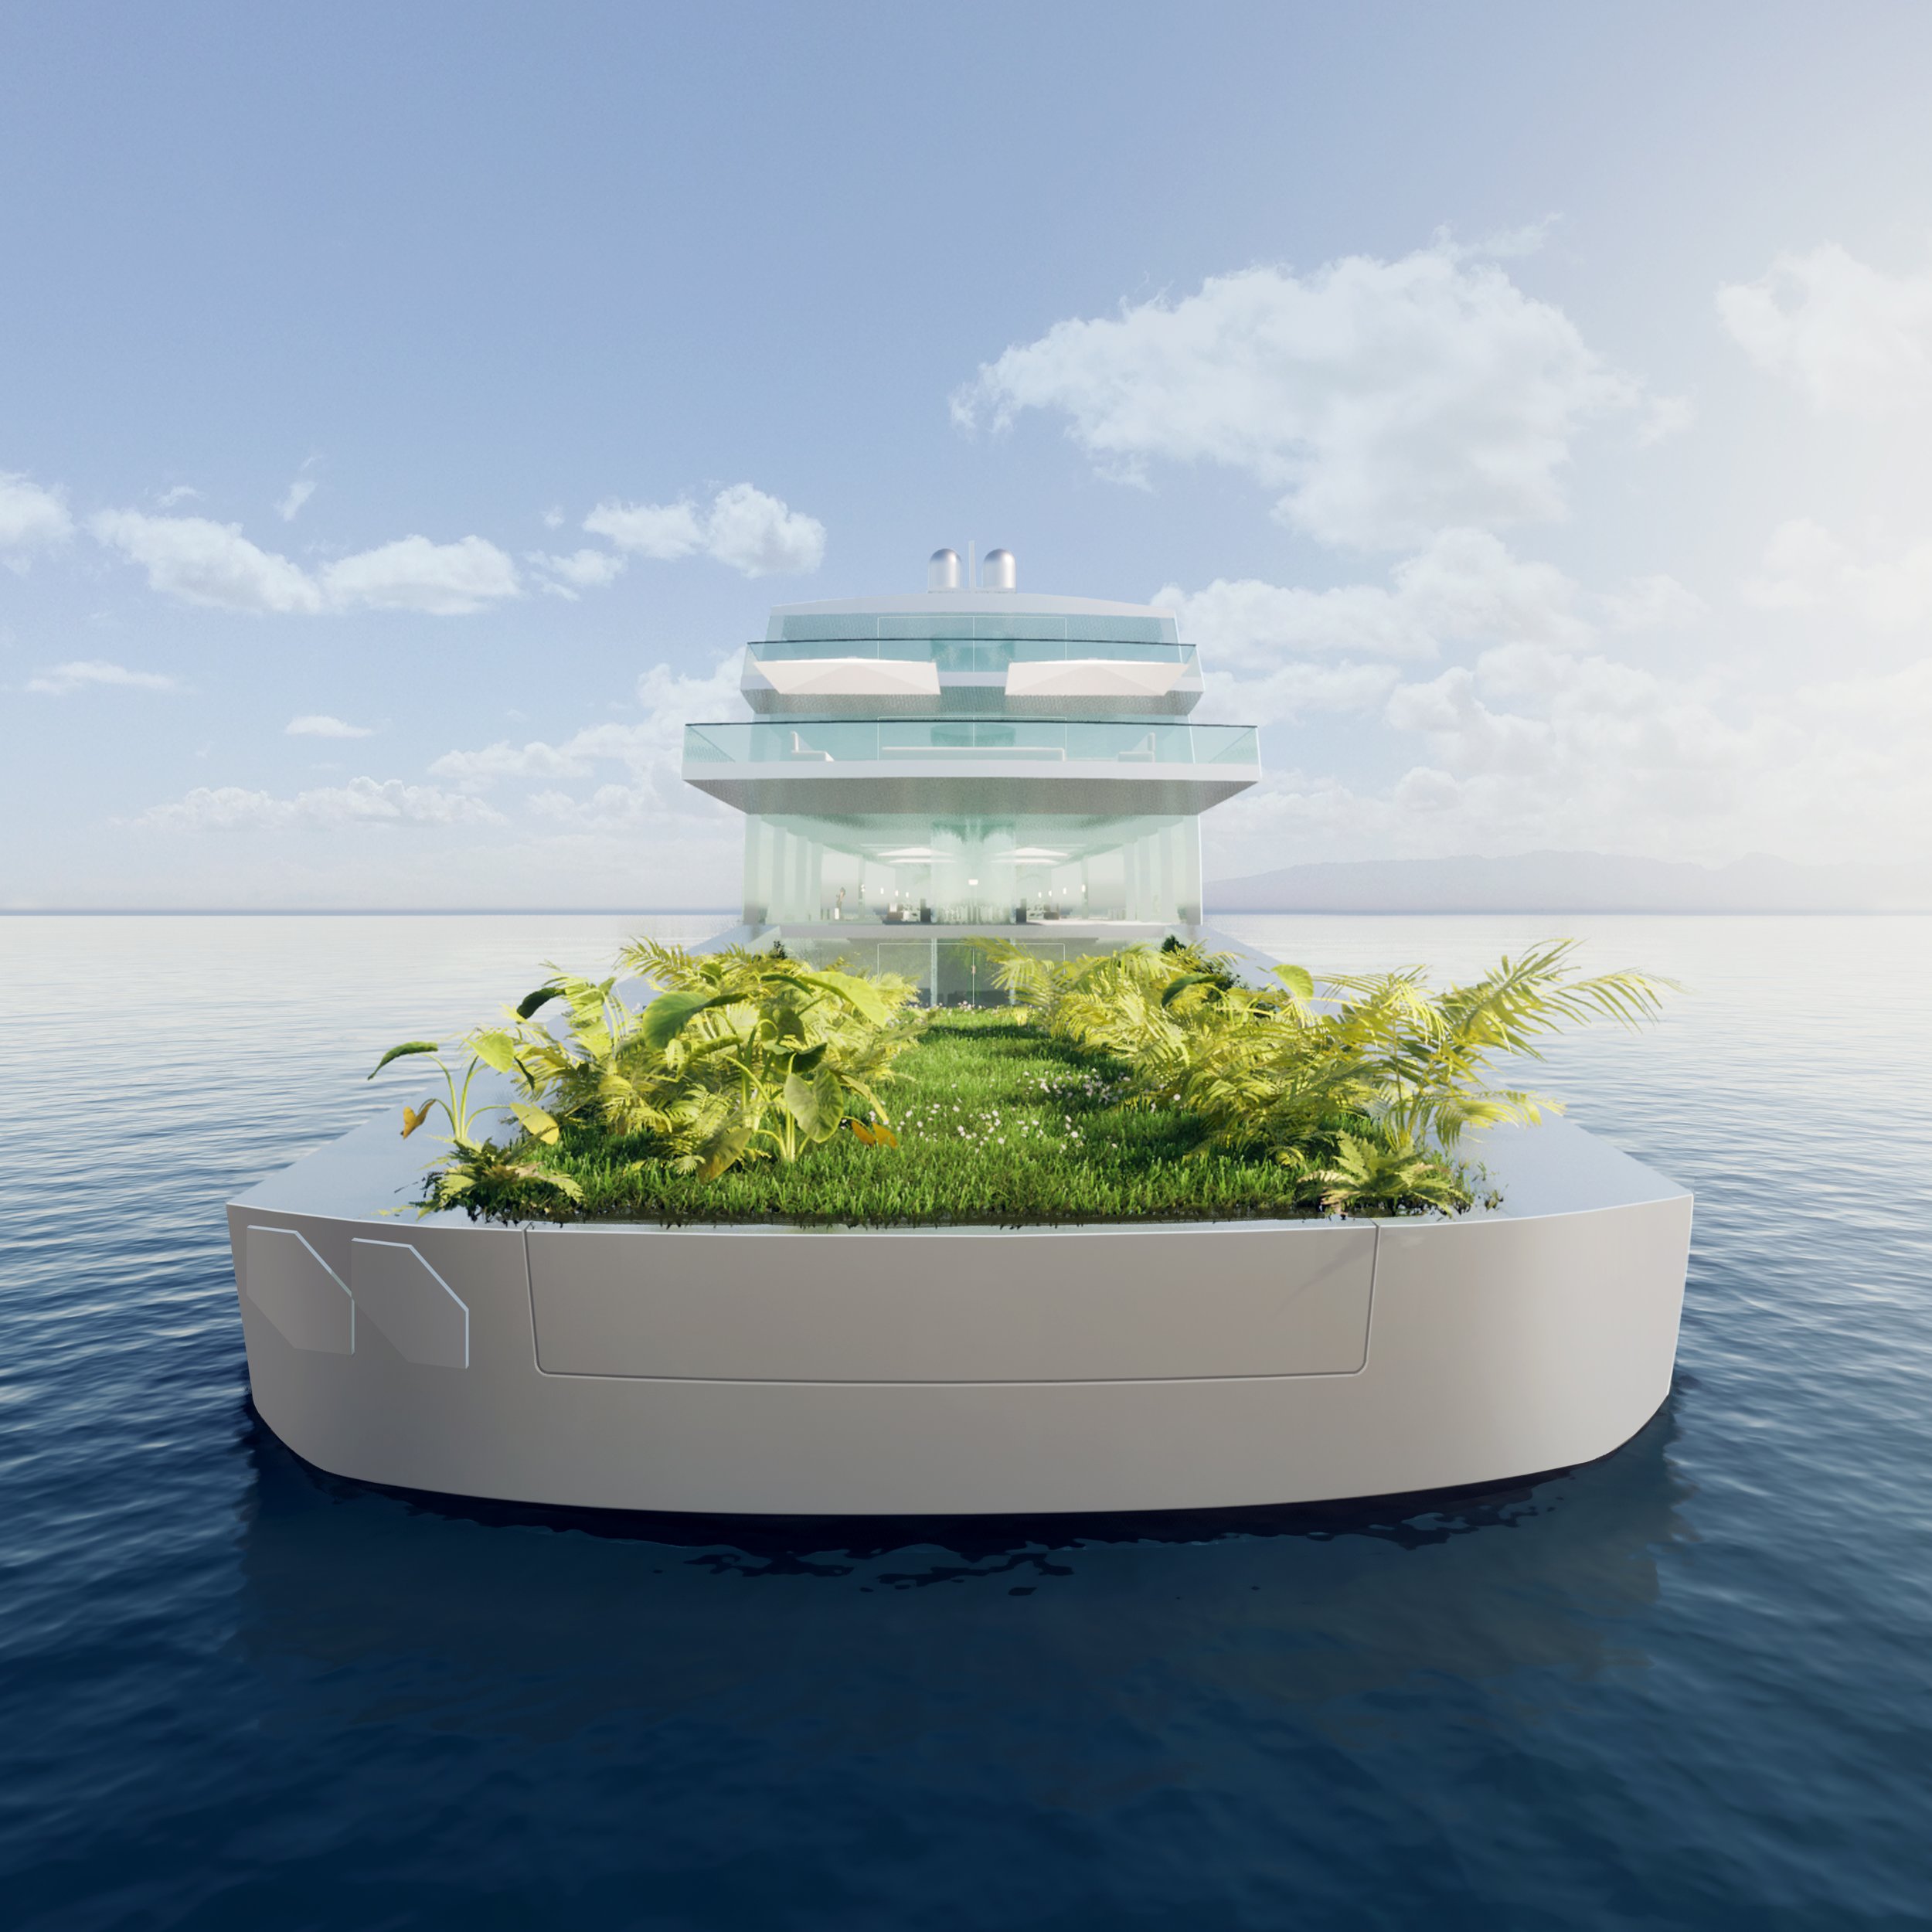 Motor_yacht_U_Concept_design_03c.jpg